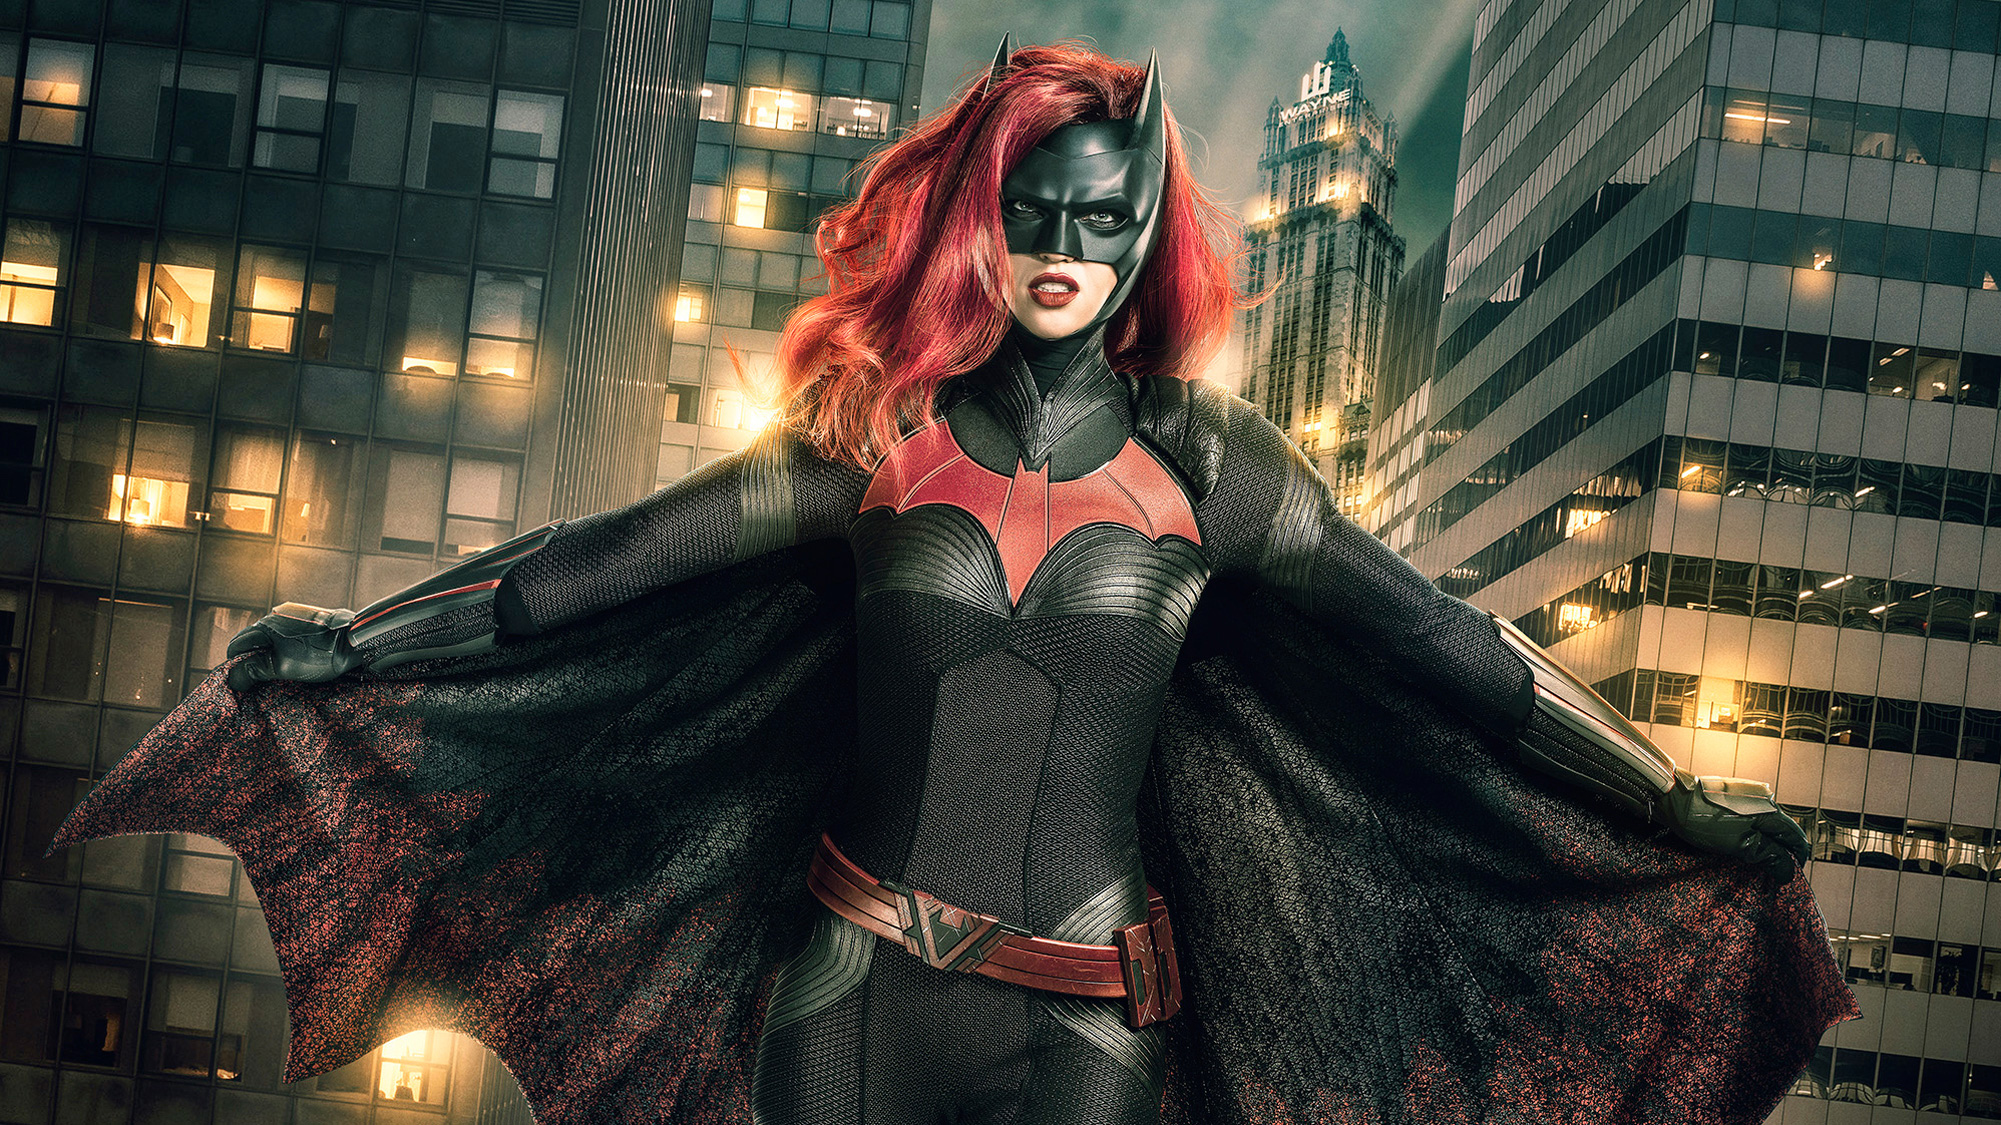 batwoman tapete,erfundener charakter,batman,superheld,cg kunstwerk,superschurke